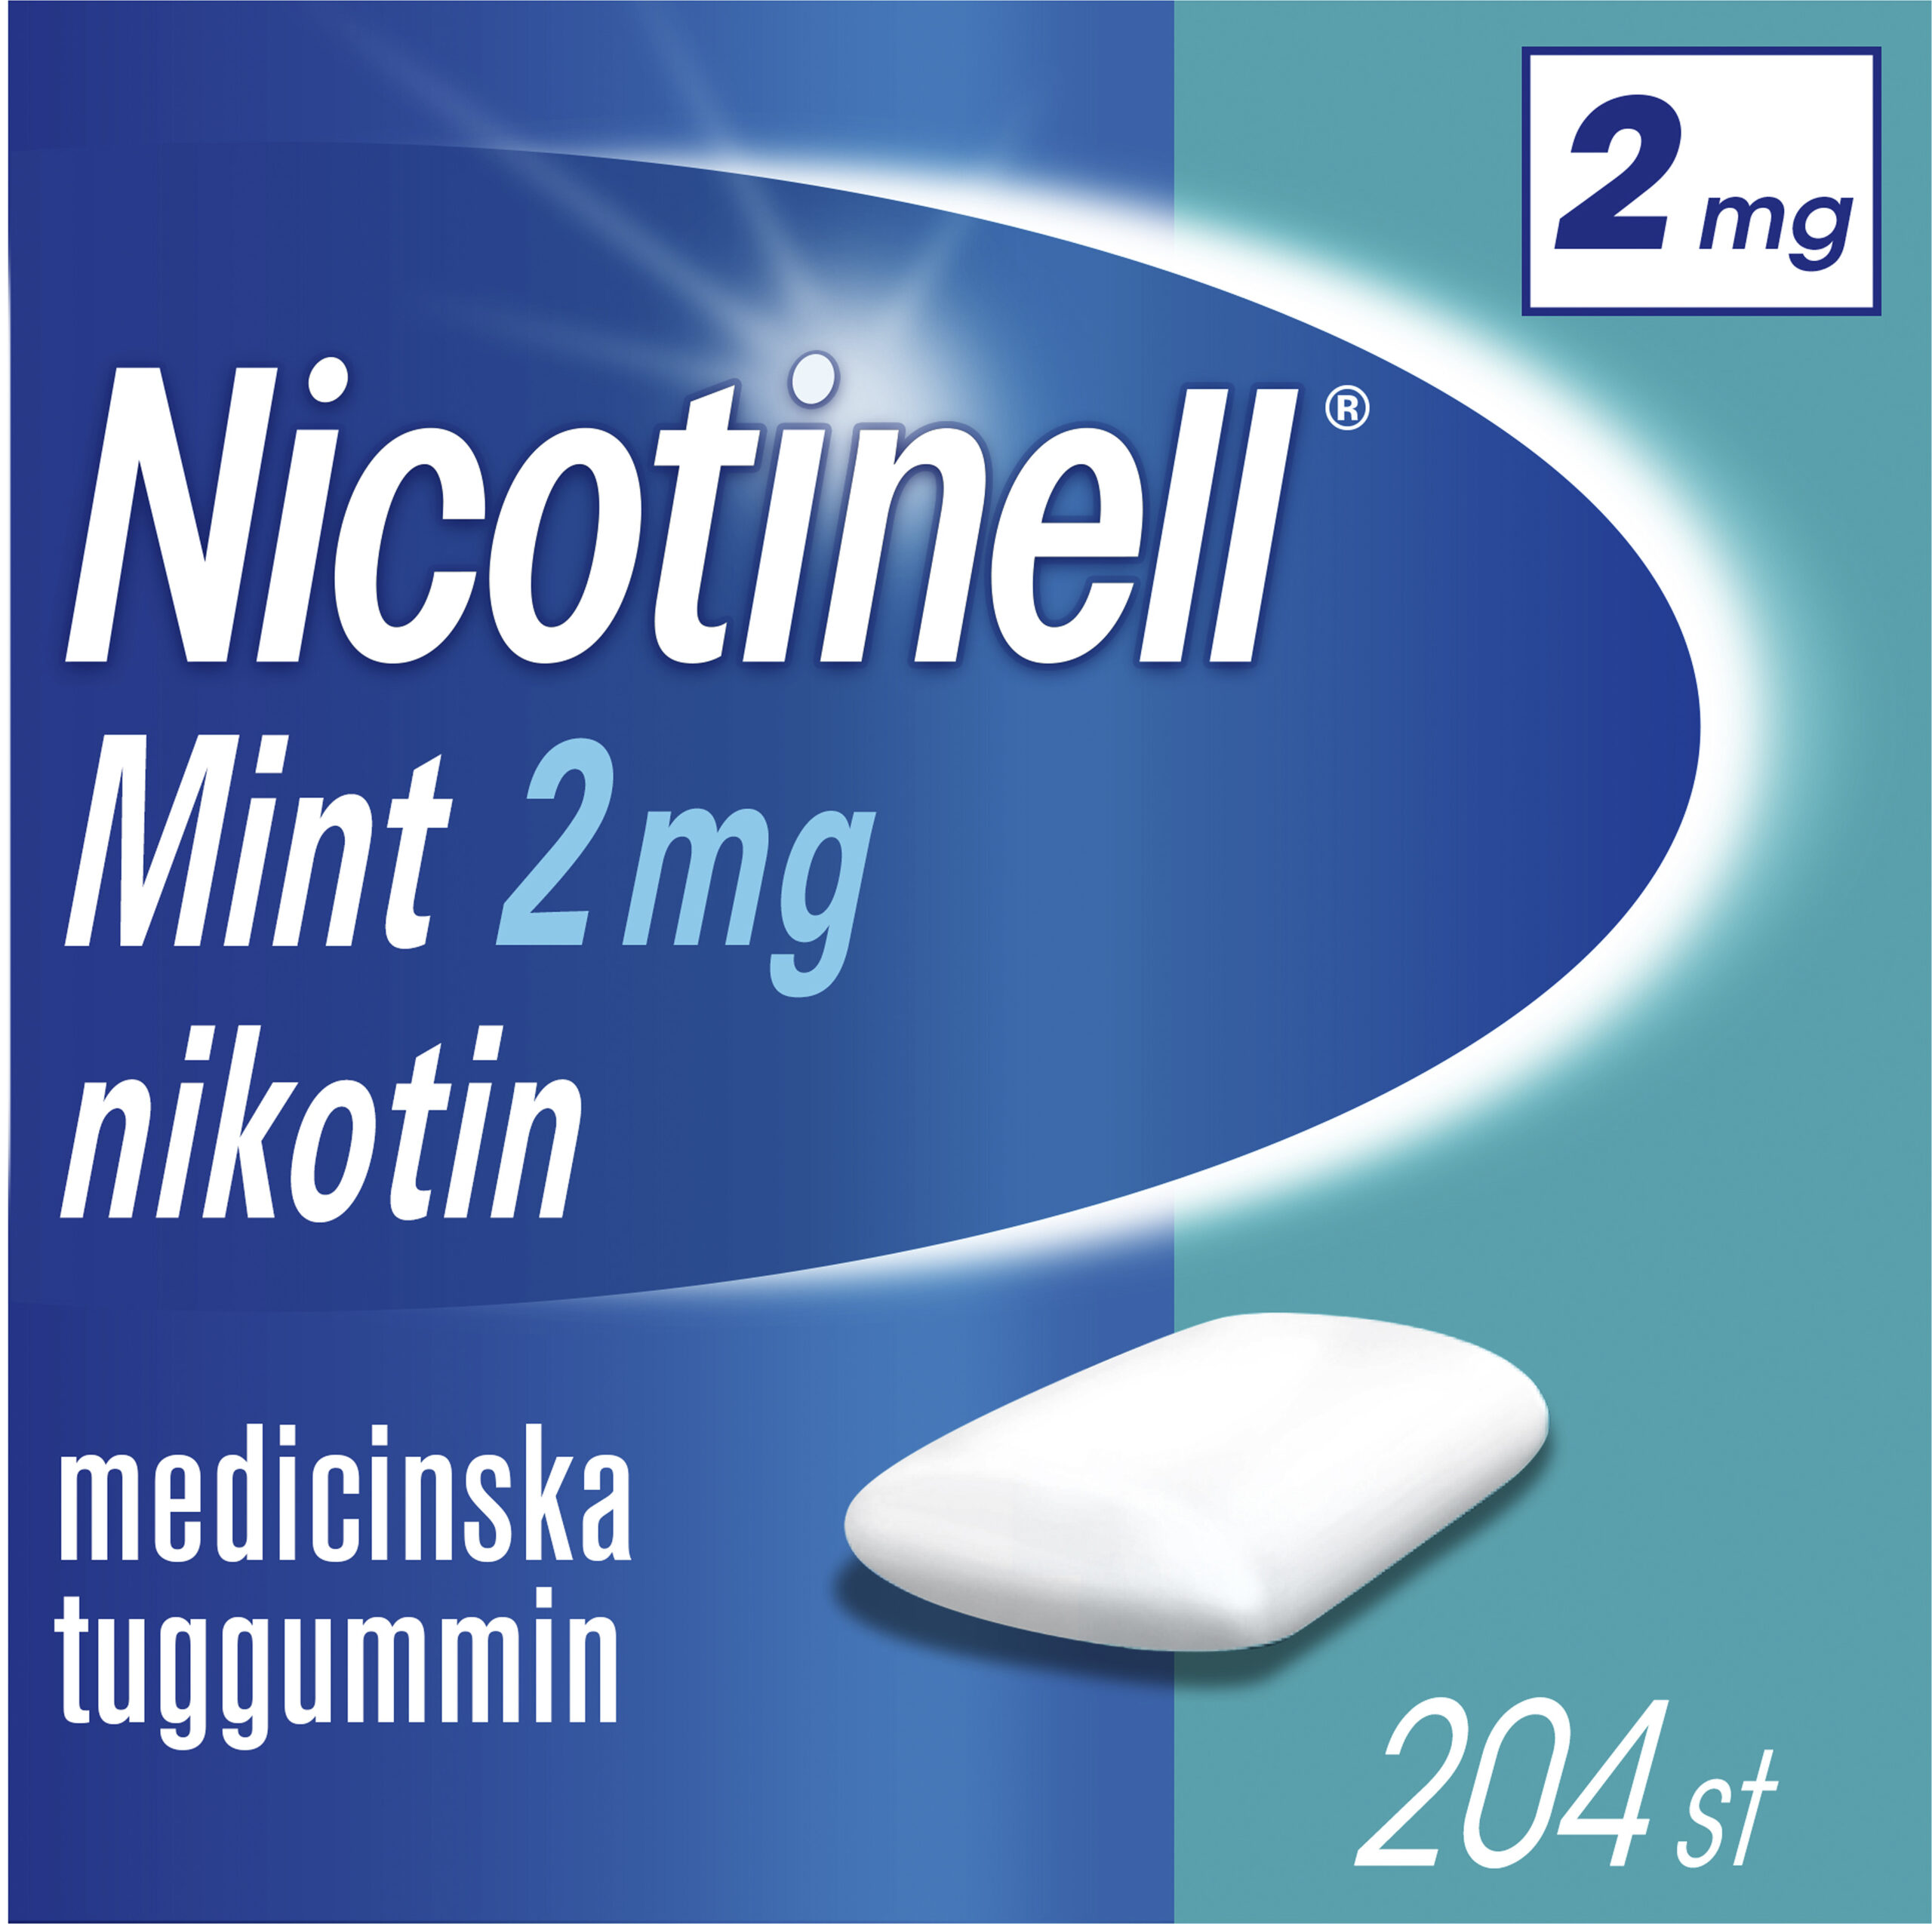 Nicotinell Mint medicinskt tuggummi 2 mg 204 st